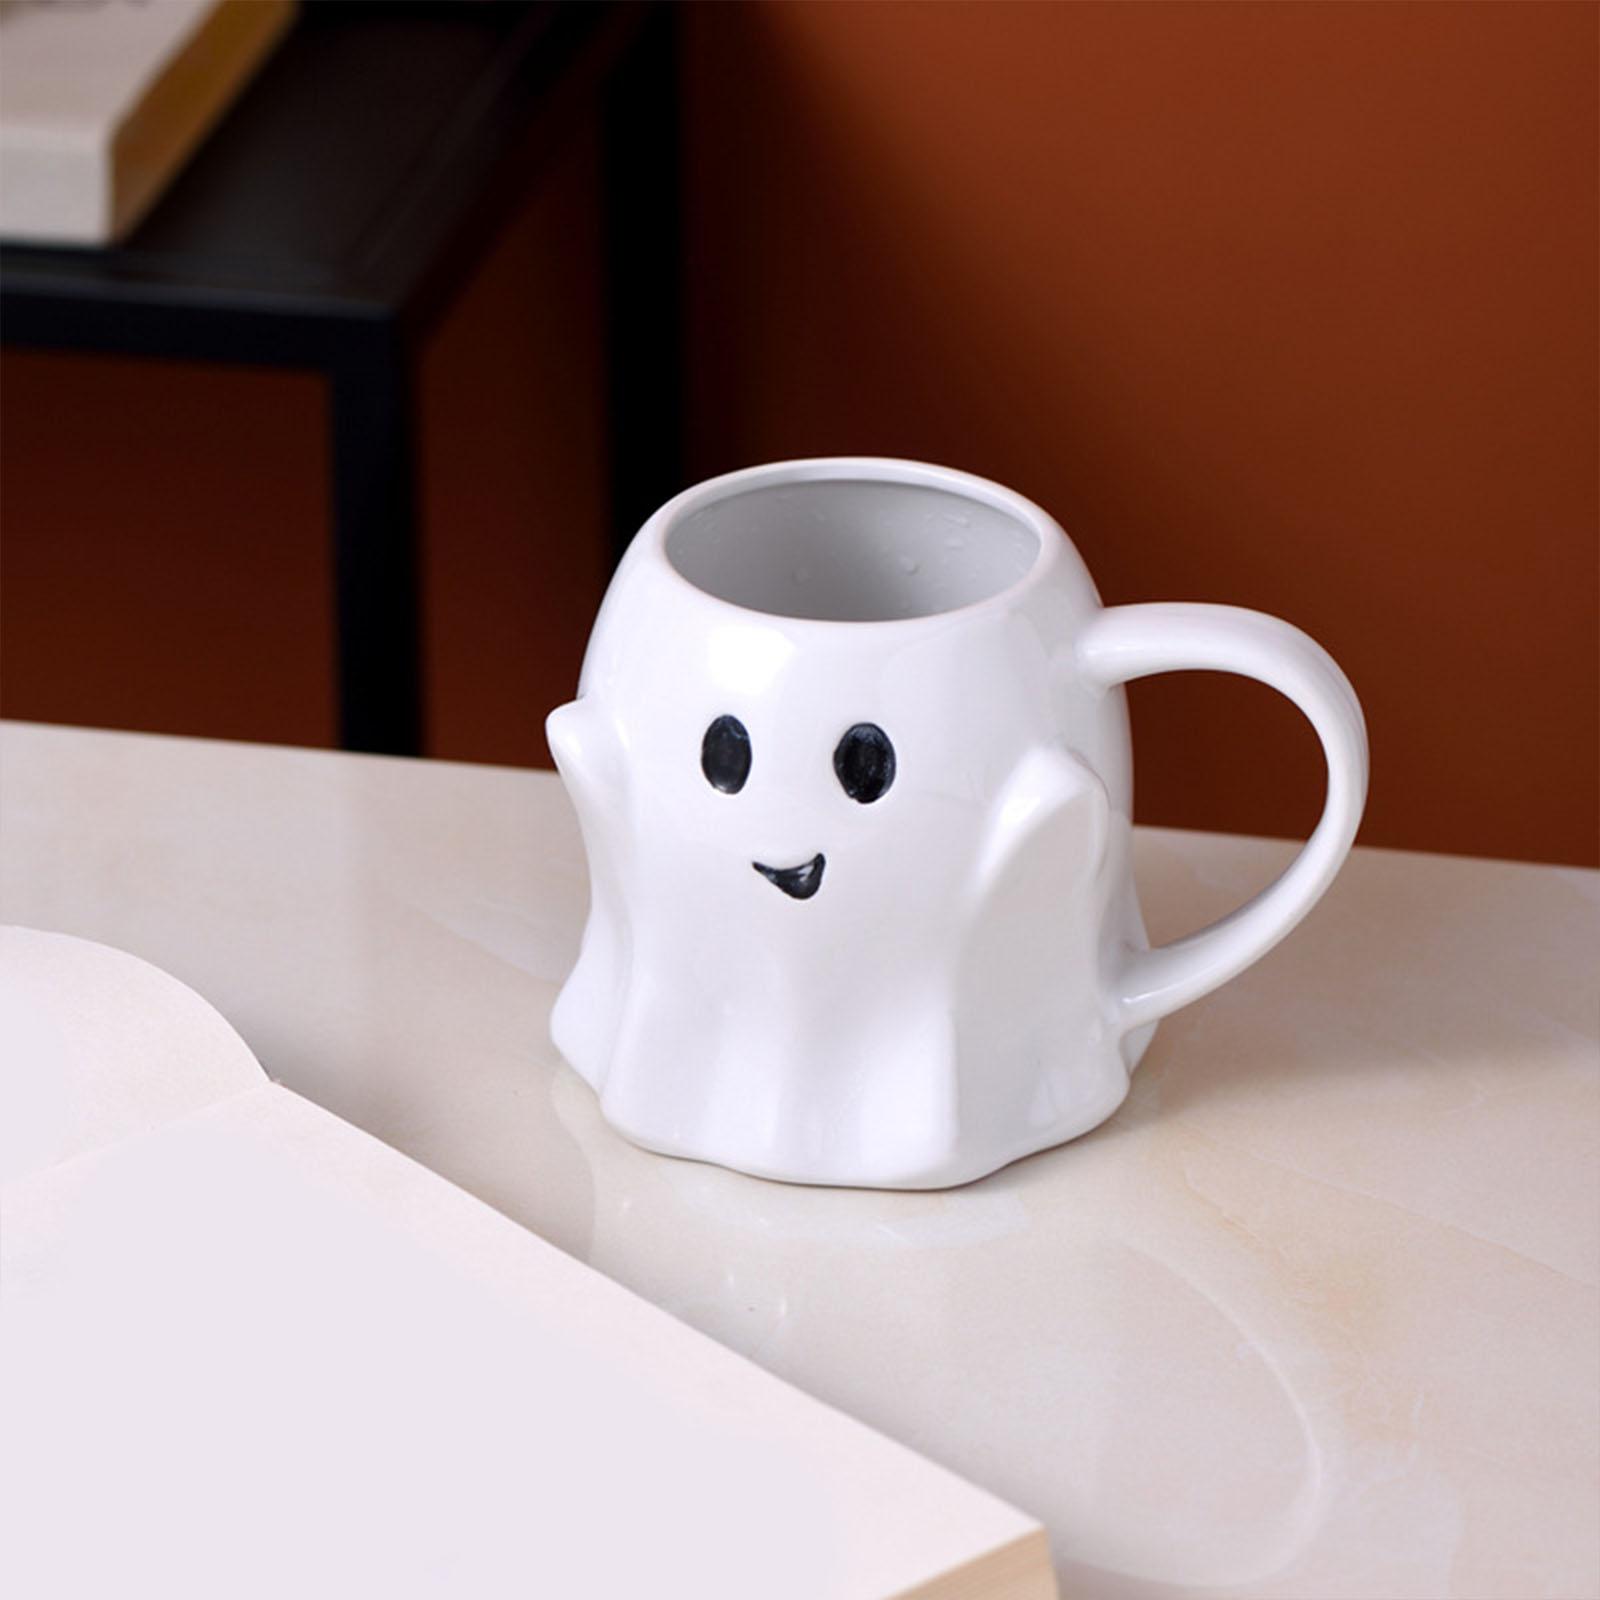 Cute Ghost Coffee Mug Novelty Porcelain Mug for Halloween Birthday Gift Xmas